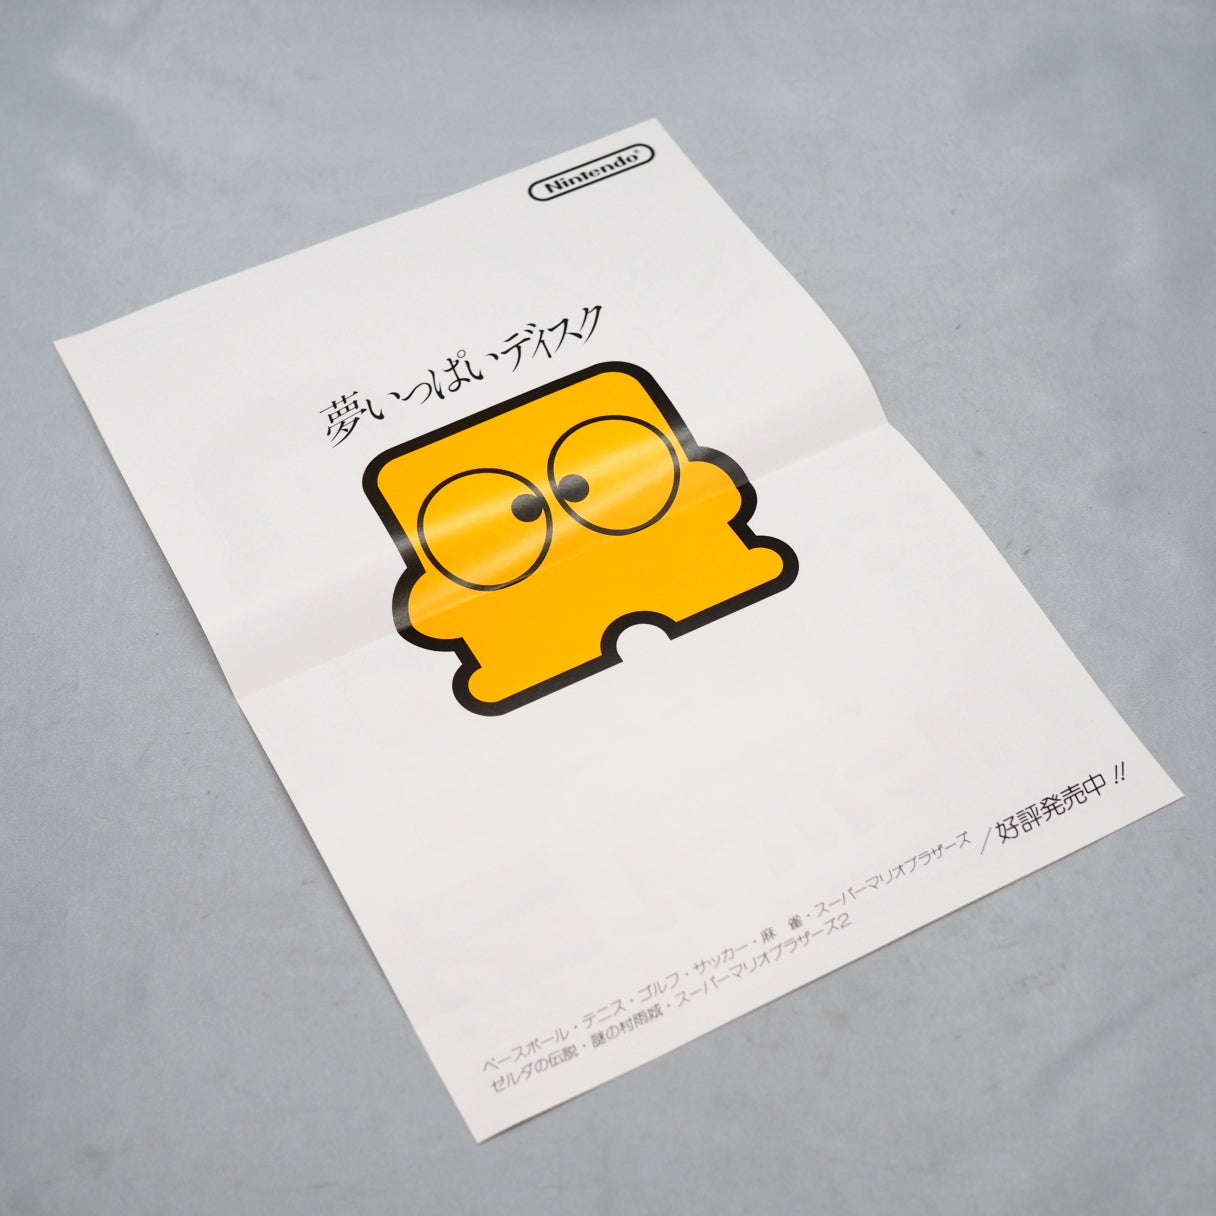 VOLLEYBALL Nintendo Famicom disk Catalog Flyer Leaflet Paper Poster